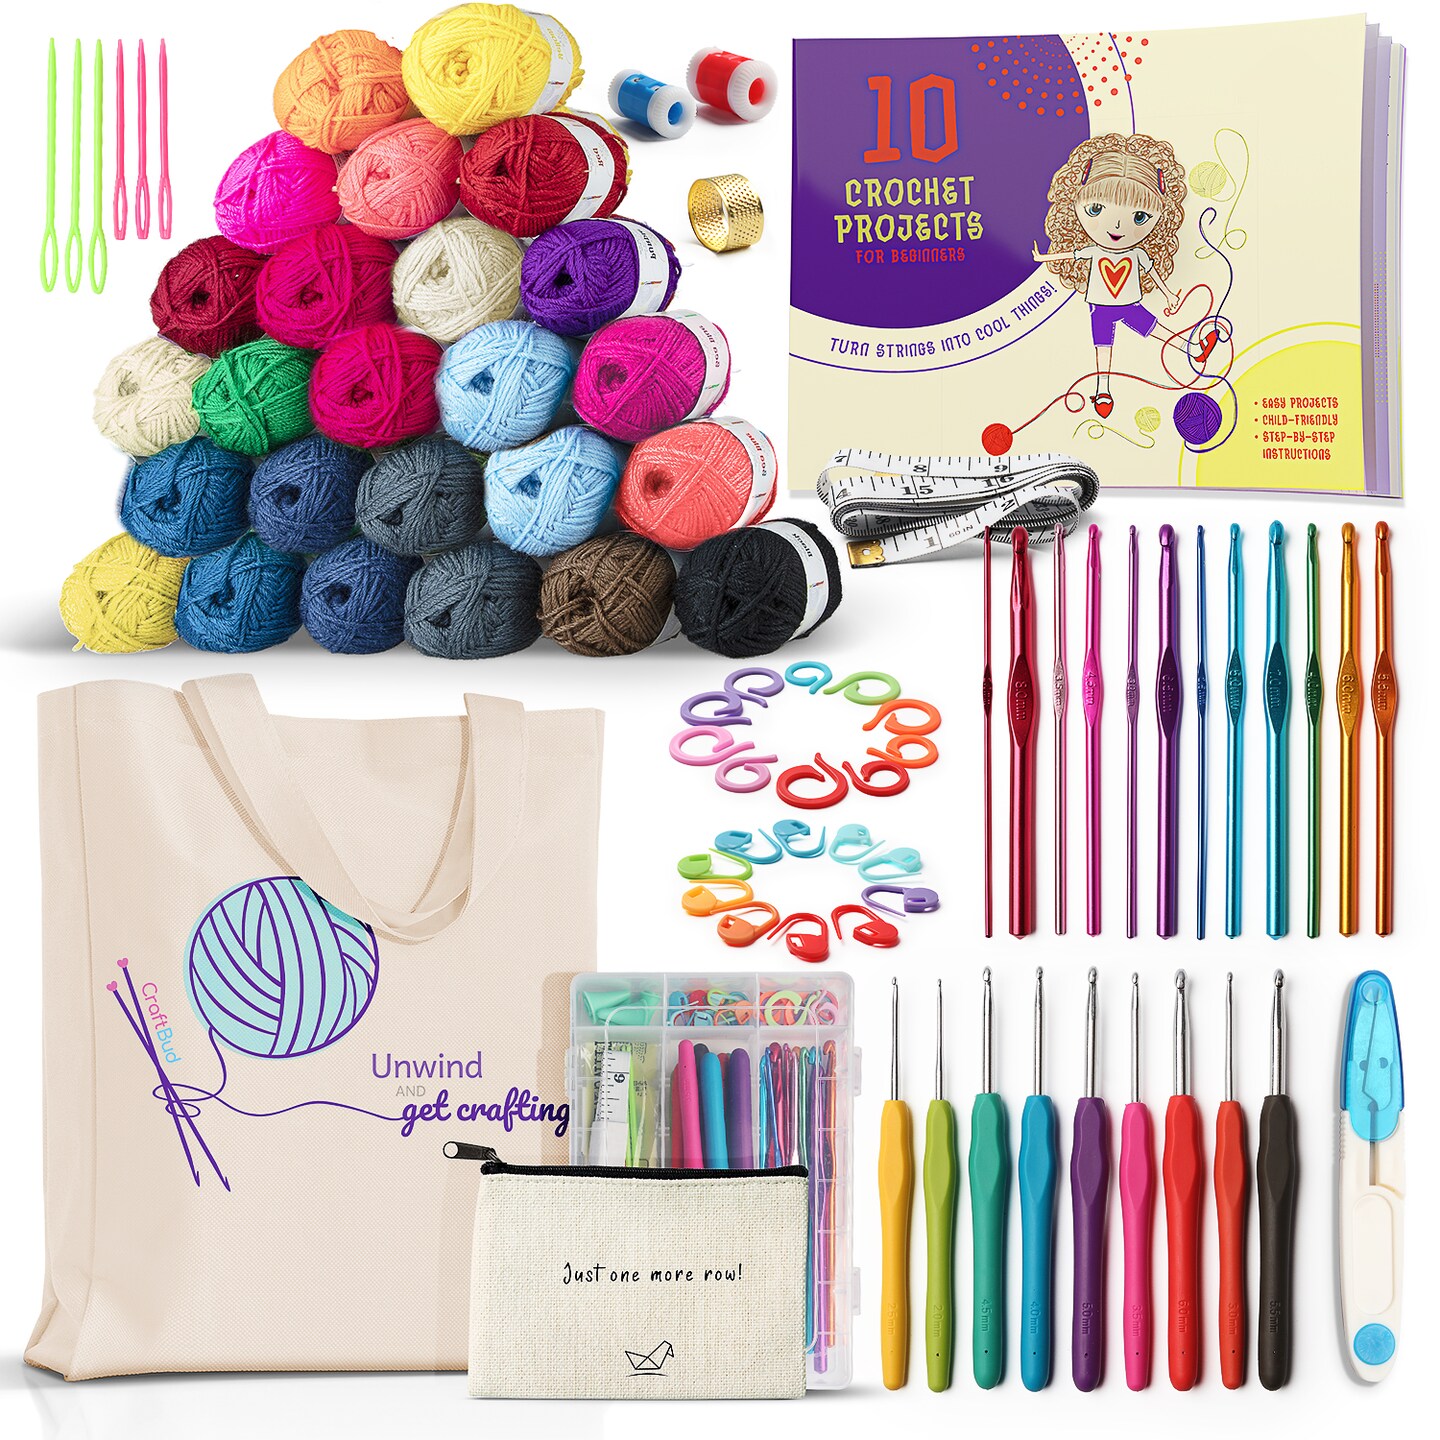 Jumblcrafts Crochet Starter Kit With Crochet Hooks And Yarn Set